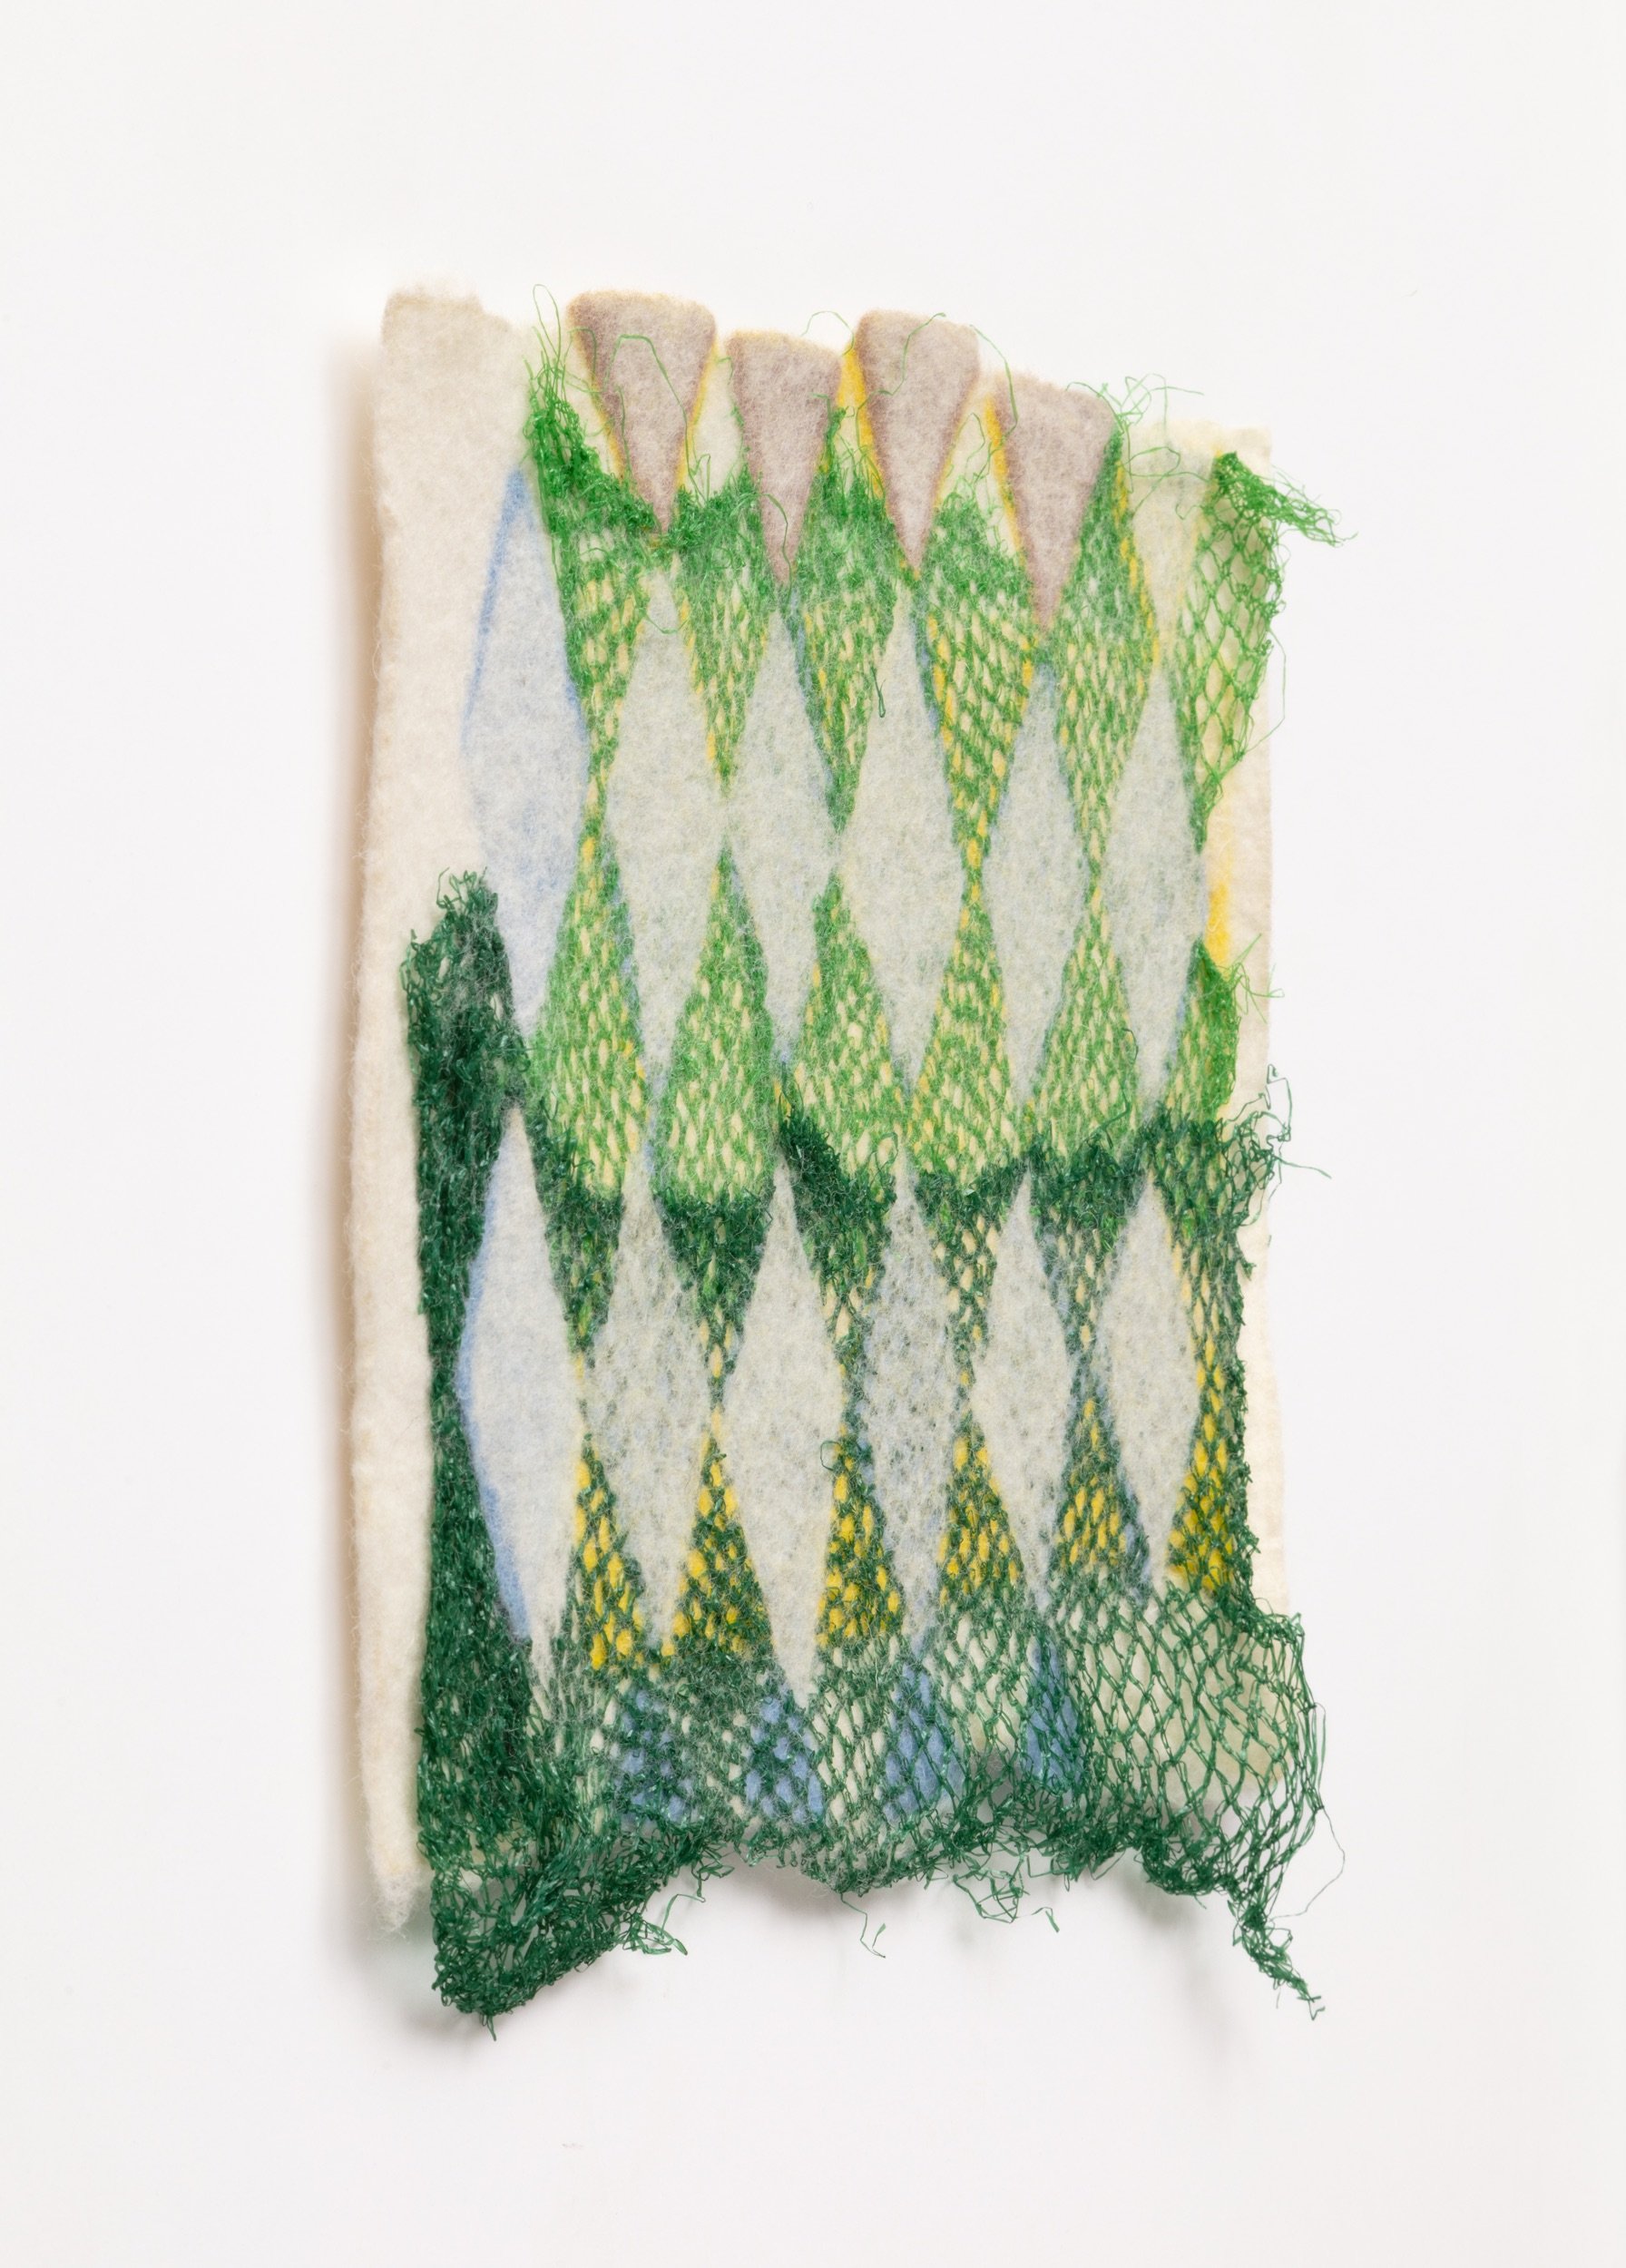  Untitled, 2022  Handfelted merino wool, plastic produce nets 